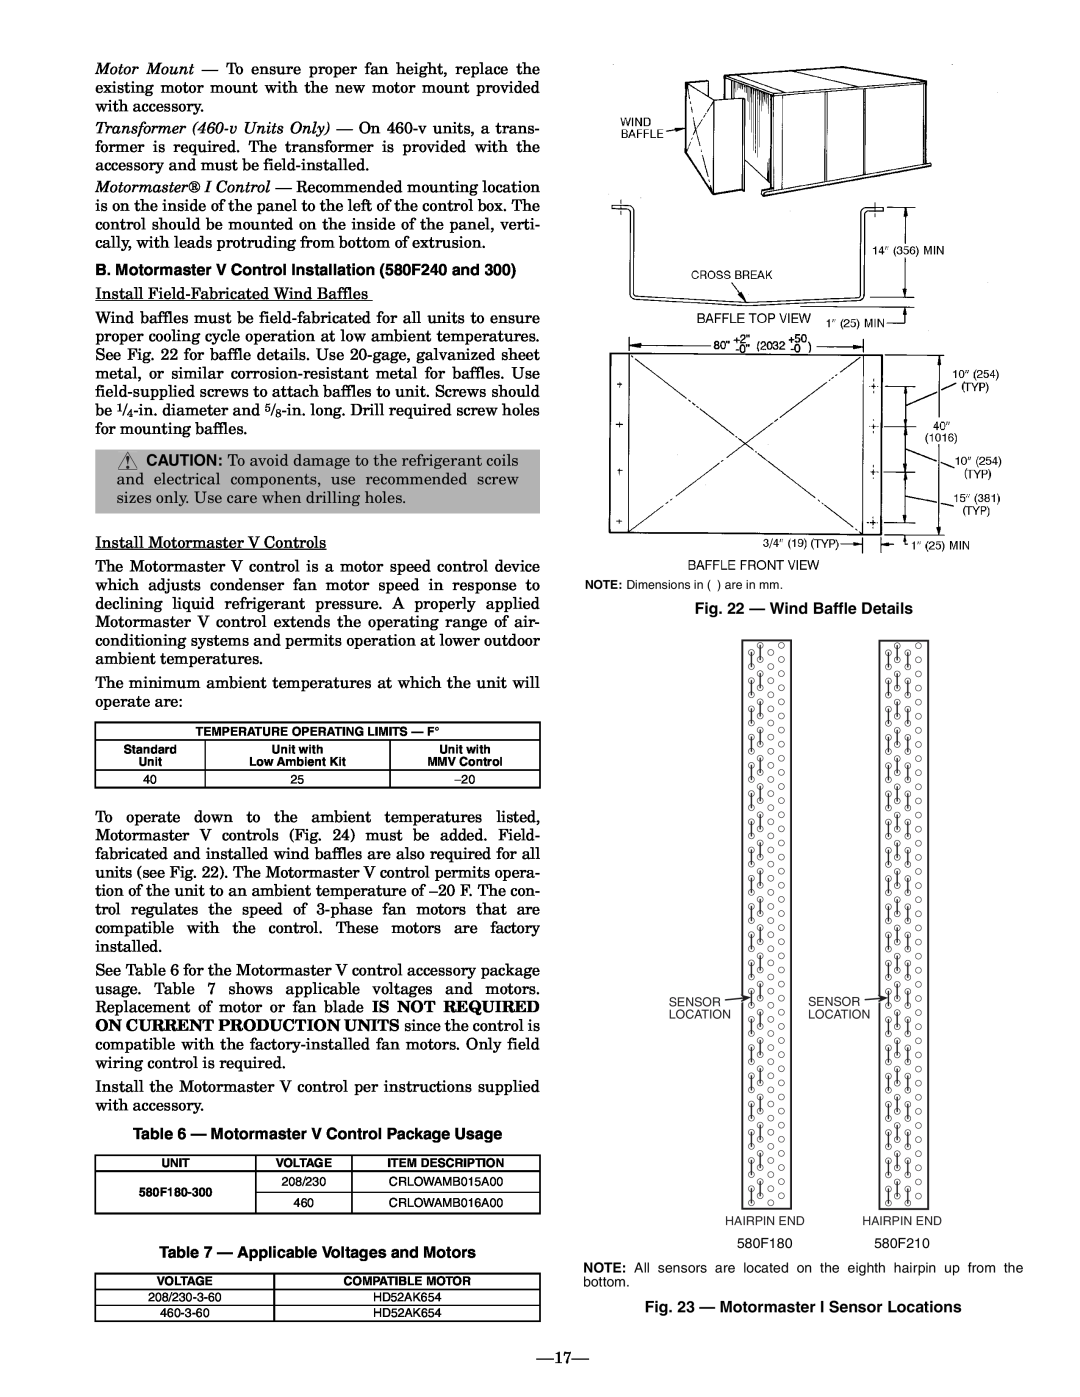 Bryant B. Motormaster V Control Installation 580F240 and, Motormaster V Control Package Usage, Wind Baffle Details 